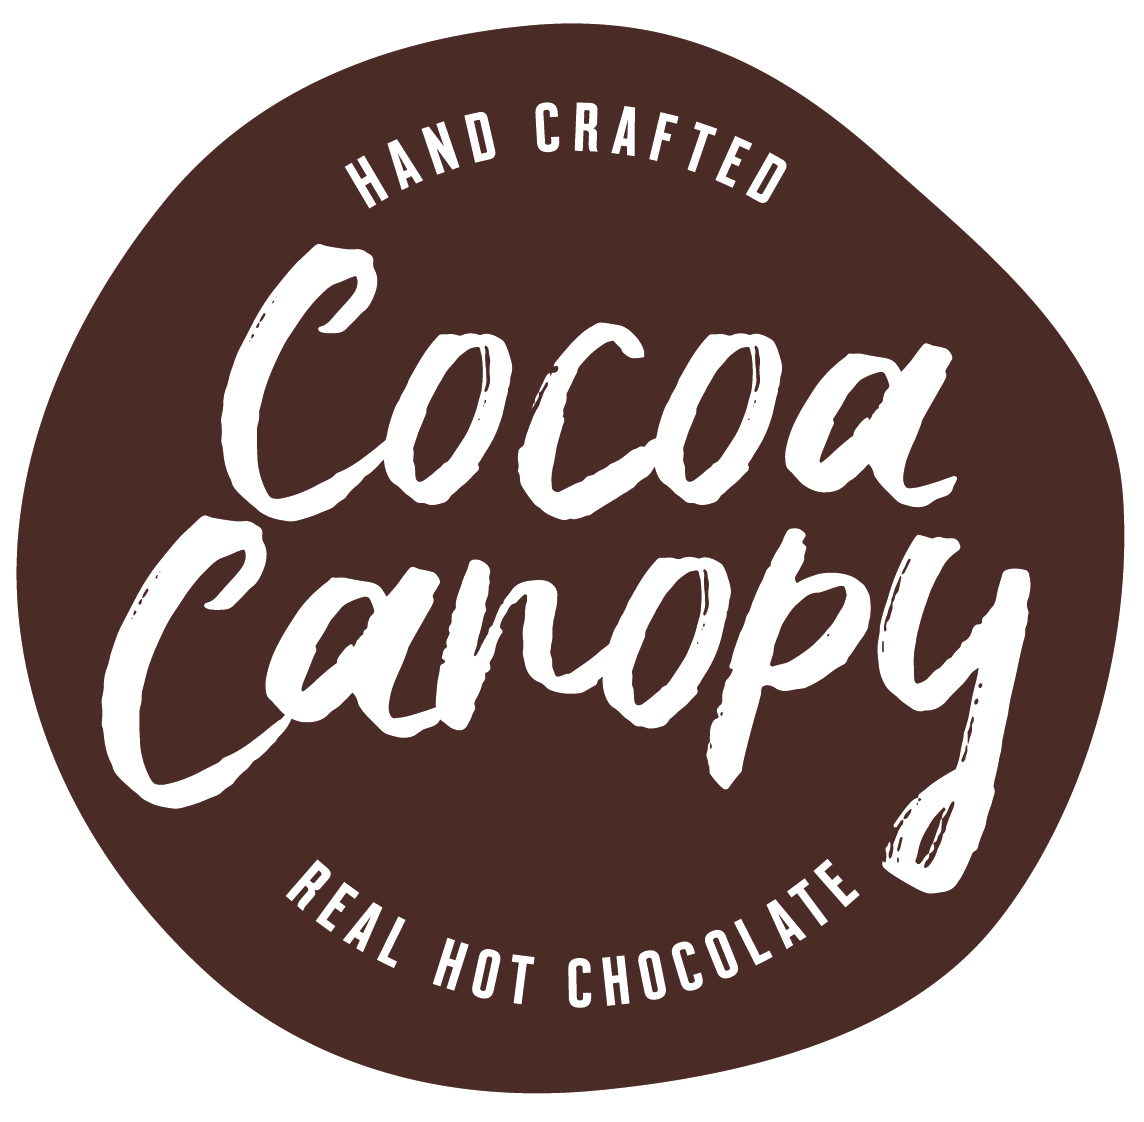 Cocoa Canopy